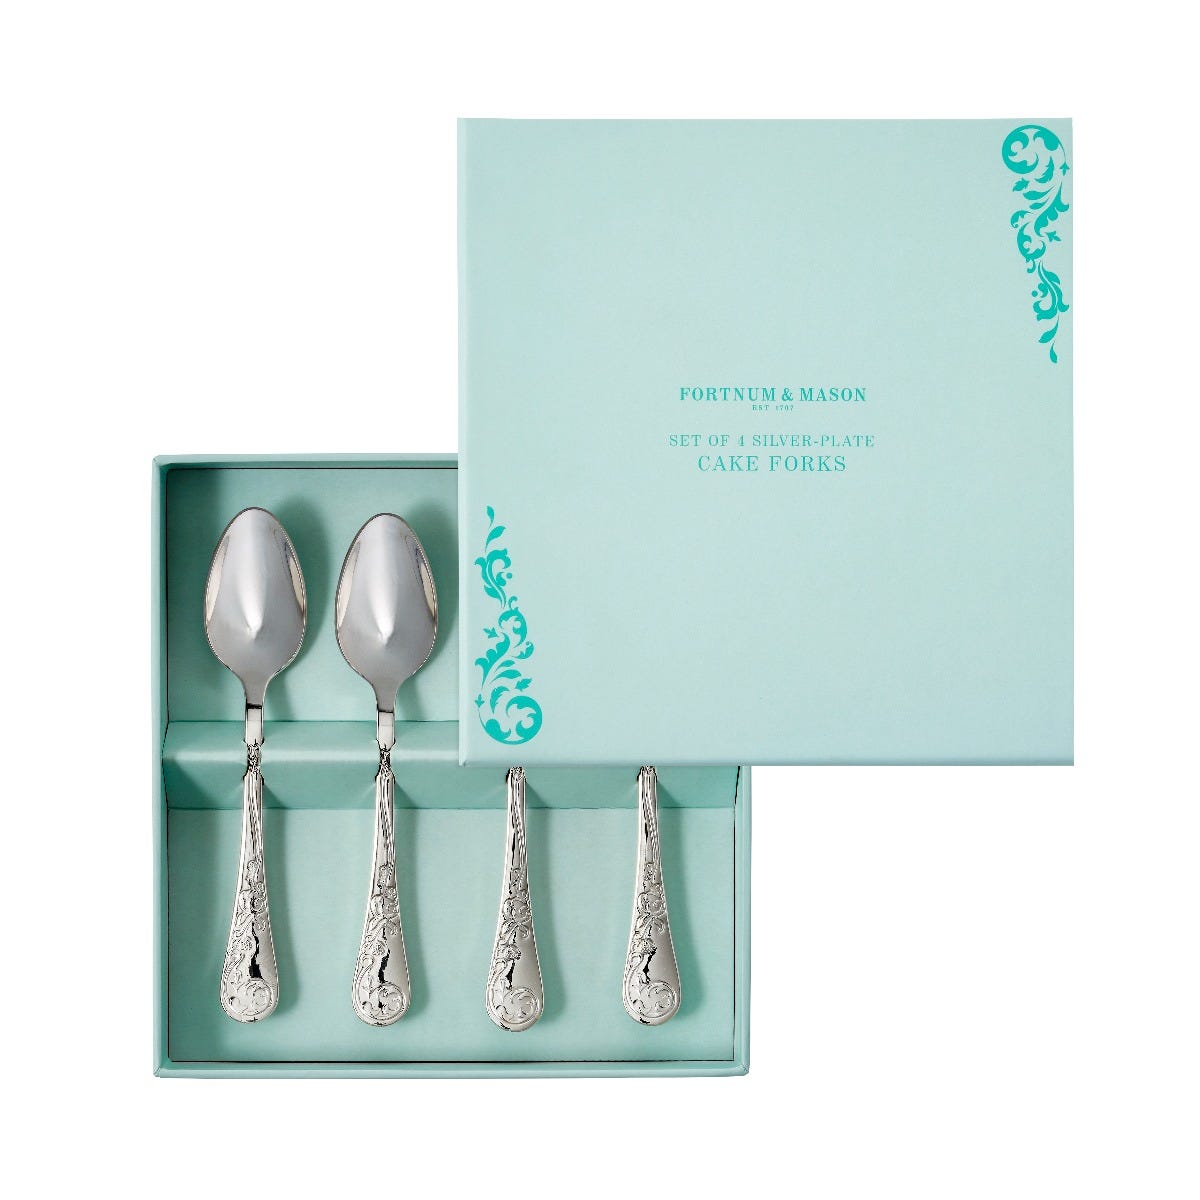 Silver-Plated Teaspoons, Set of 4, Fortnum & Mason